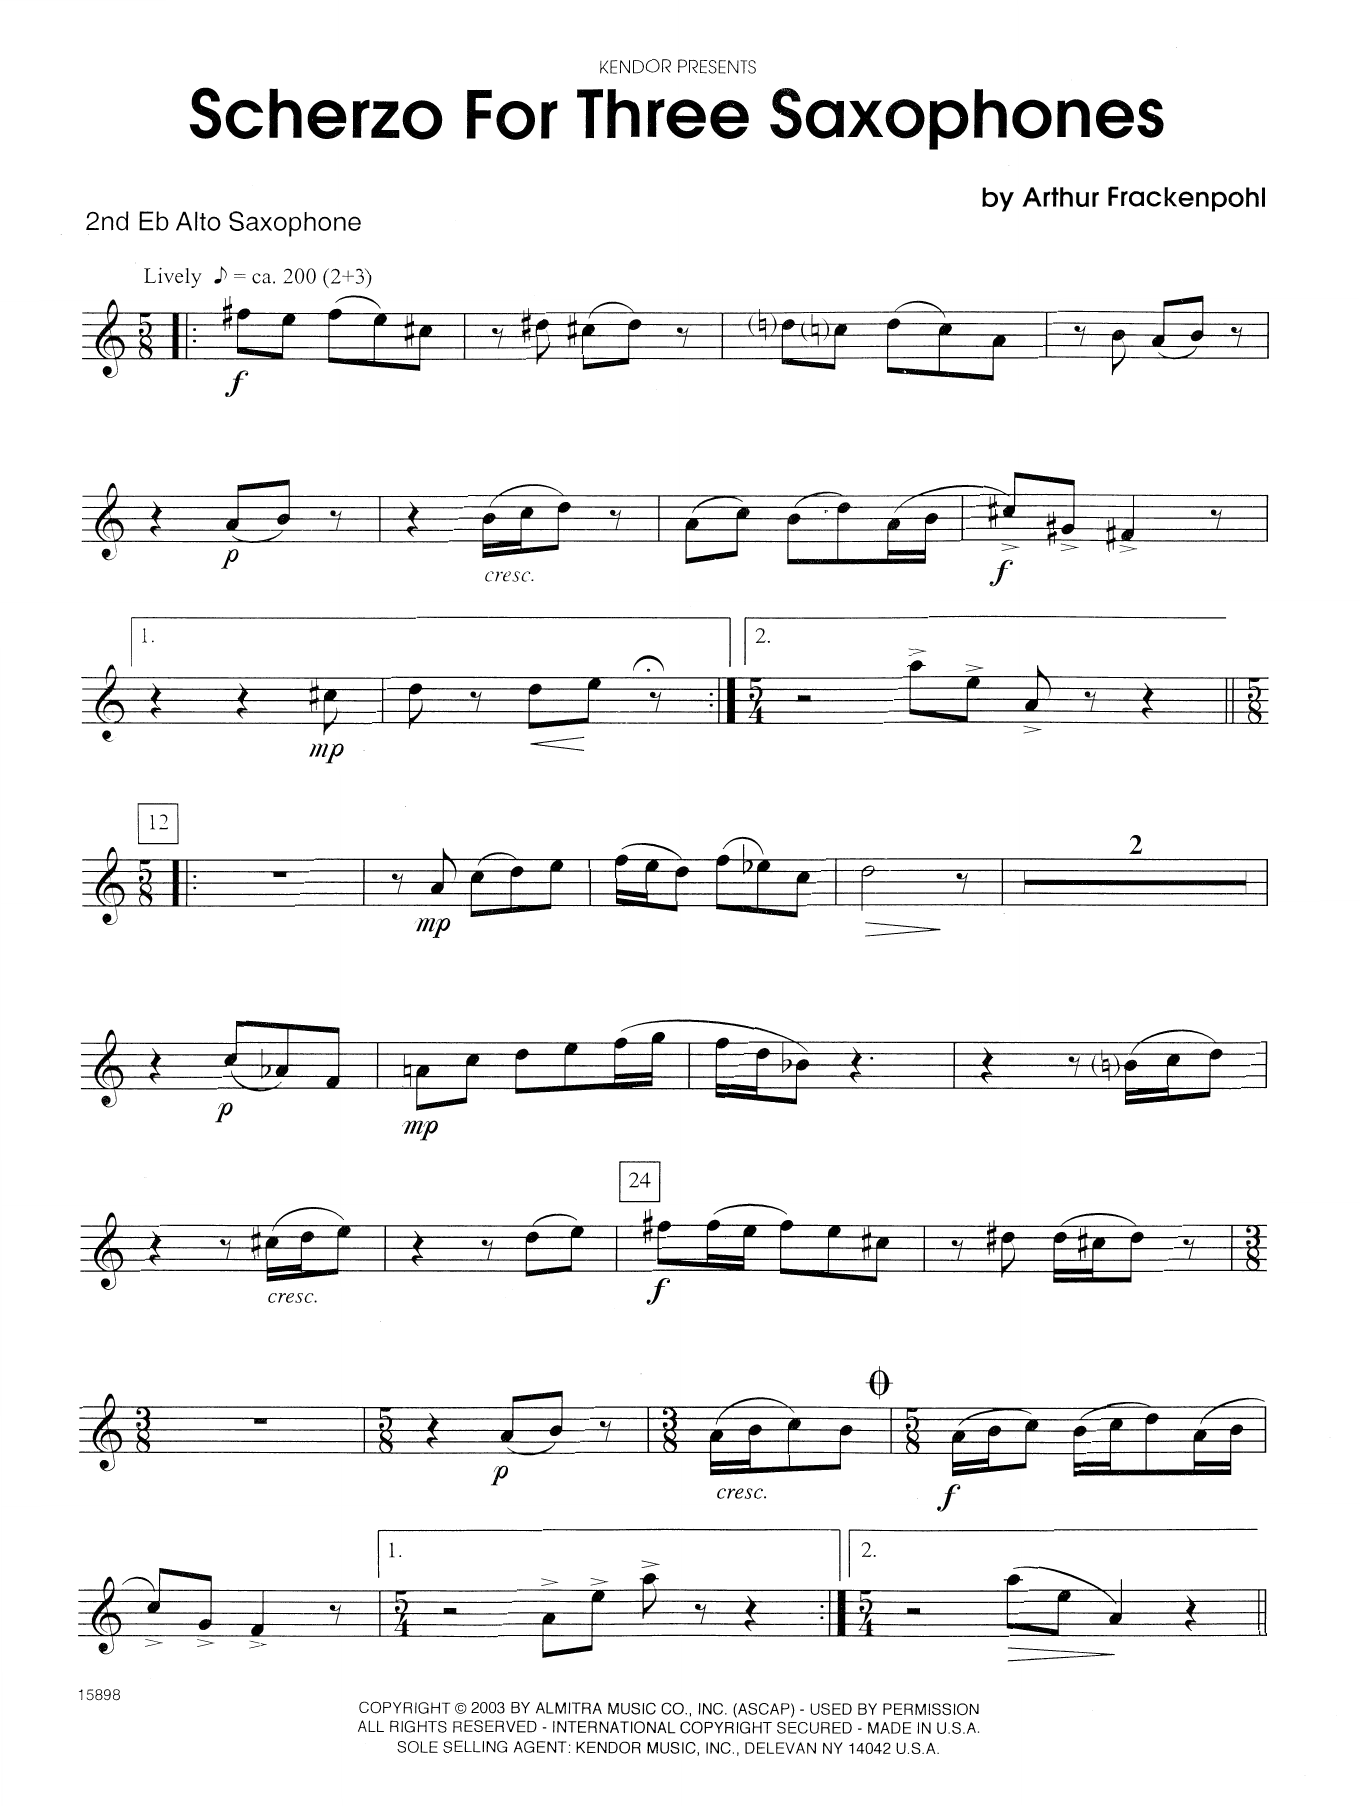 Download Arthur Frackenpohl Scherzo For Three Saxophones - 2nd Eb A Sheet Music